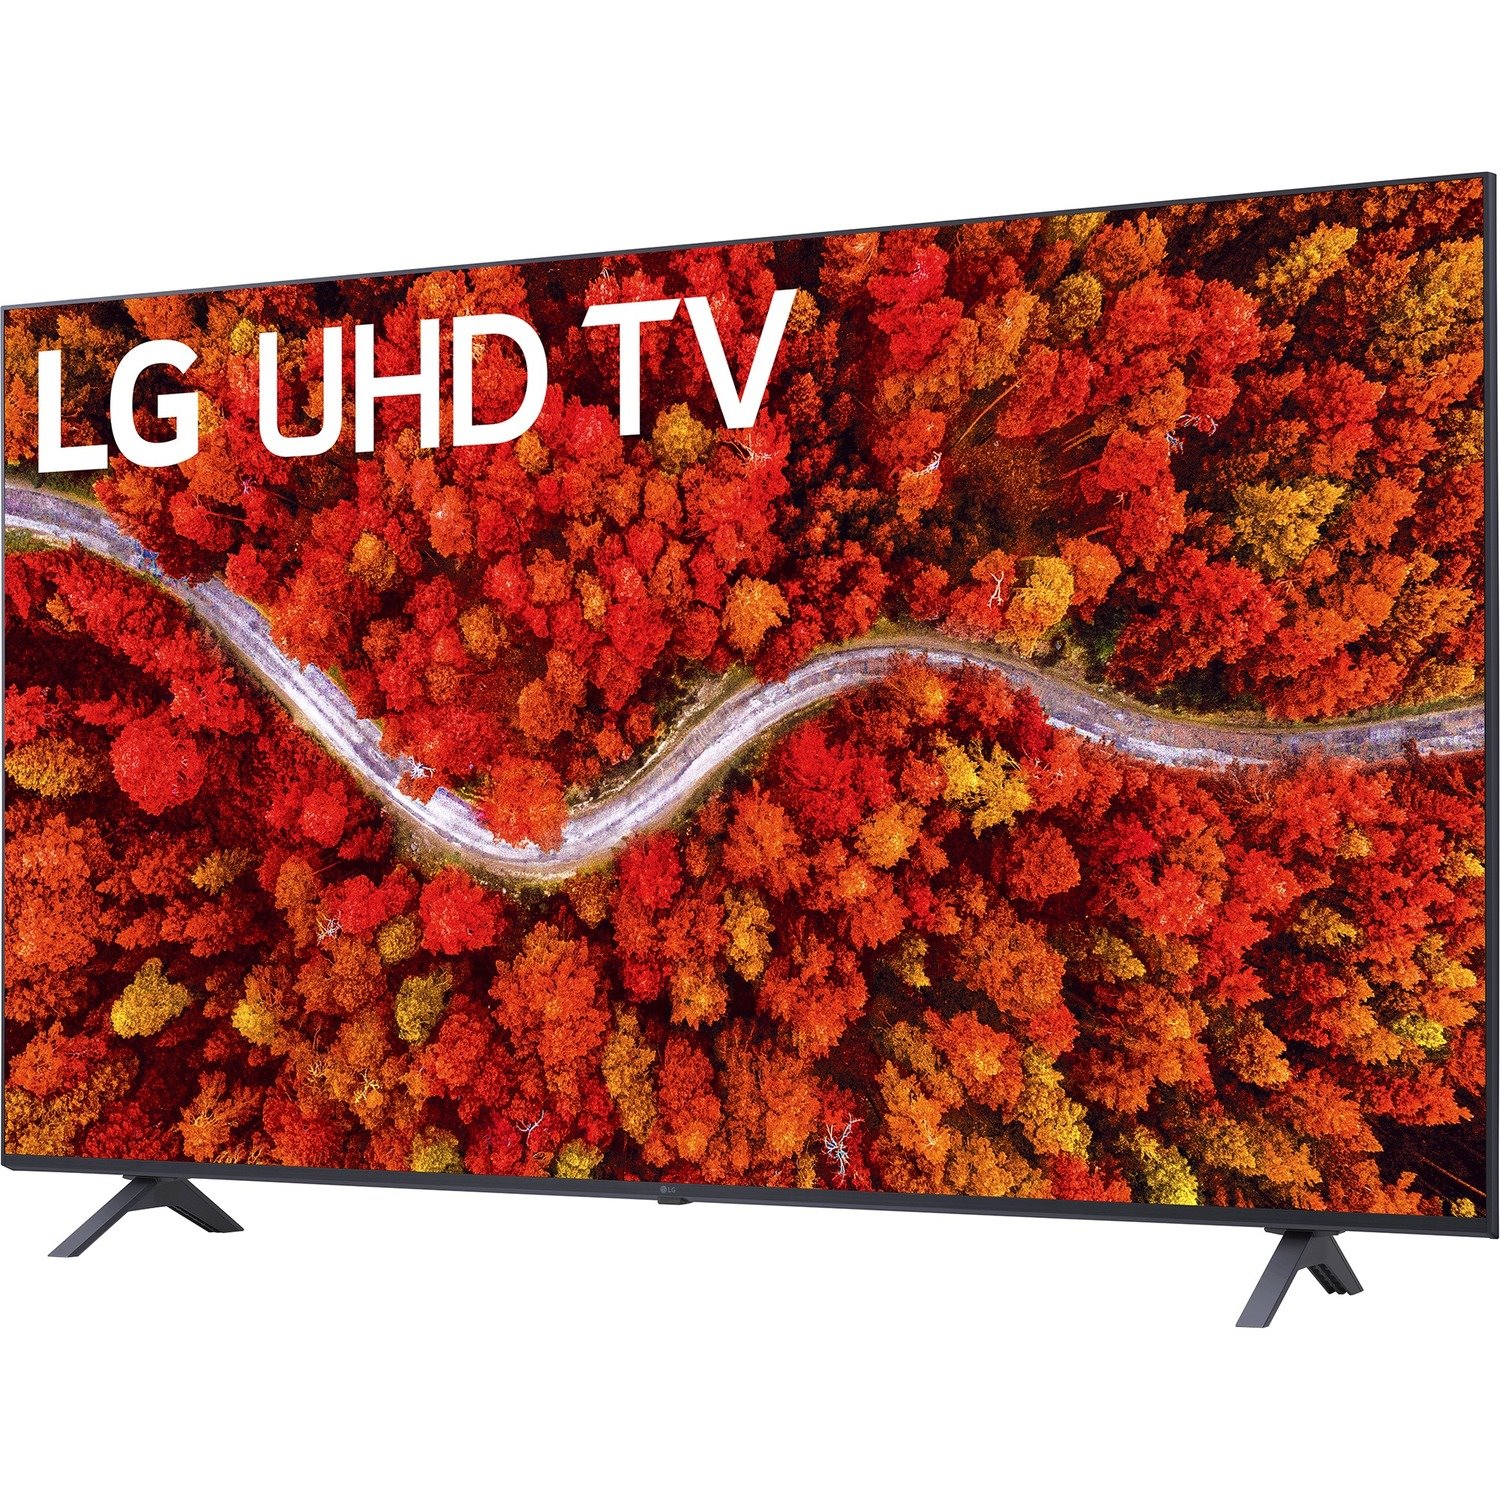 LG 55UP8000PUA 55" Smart LED-LCD TV - 4K UHDTV